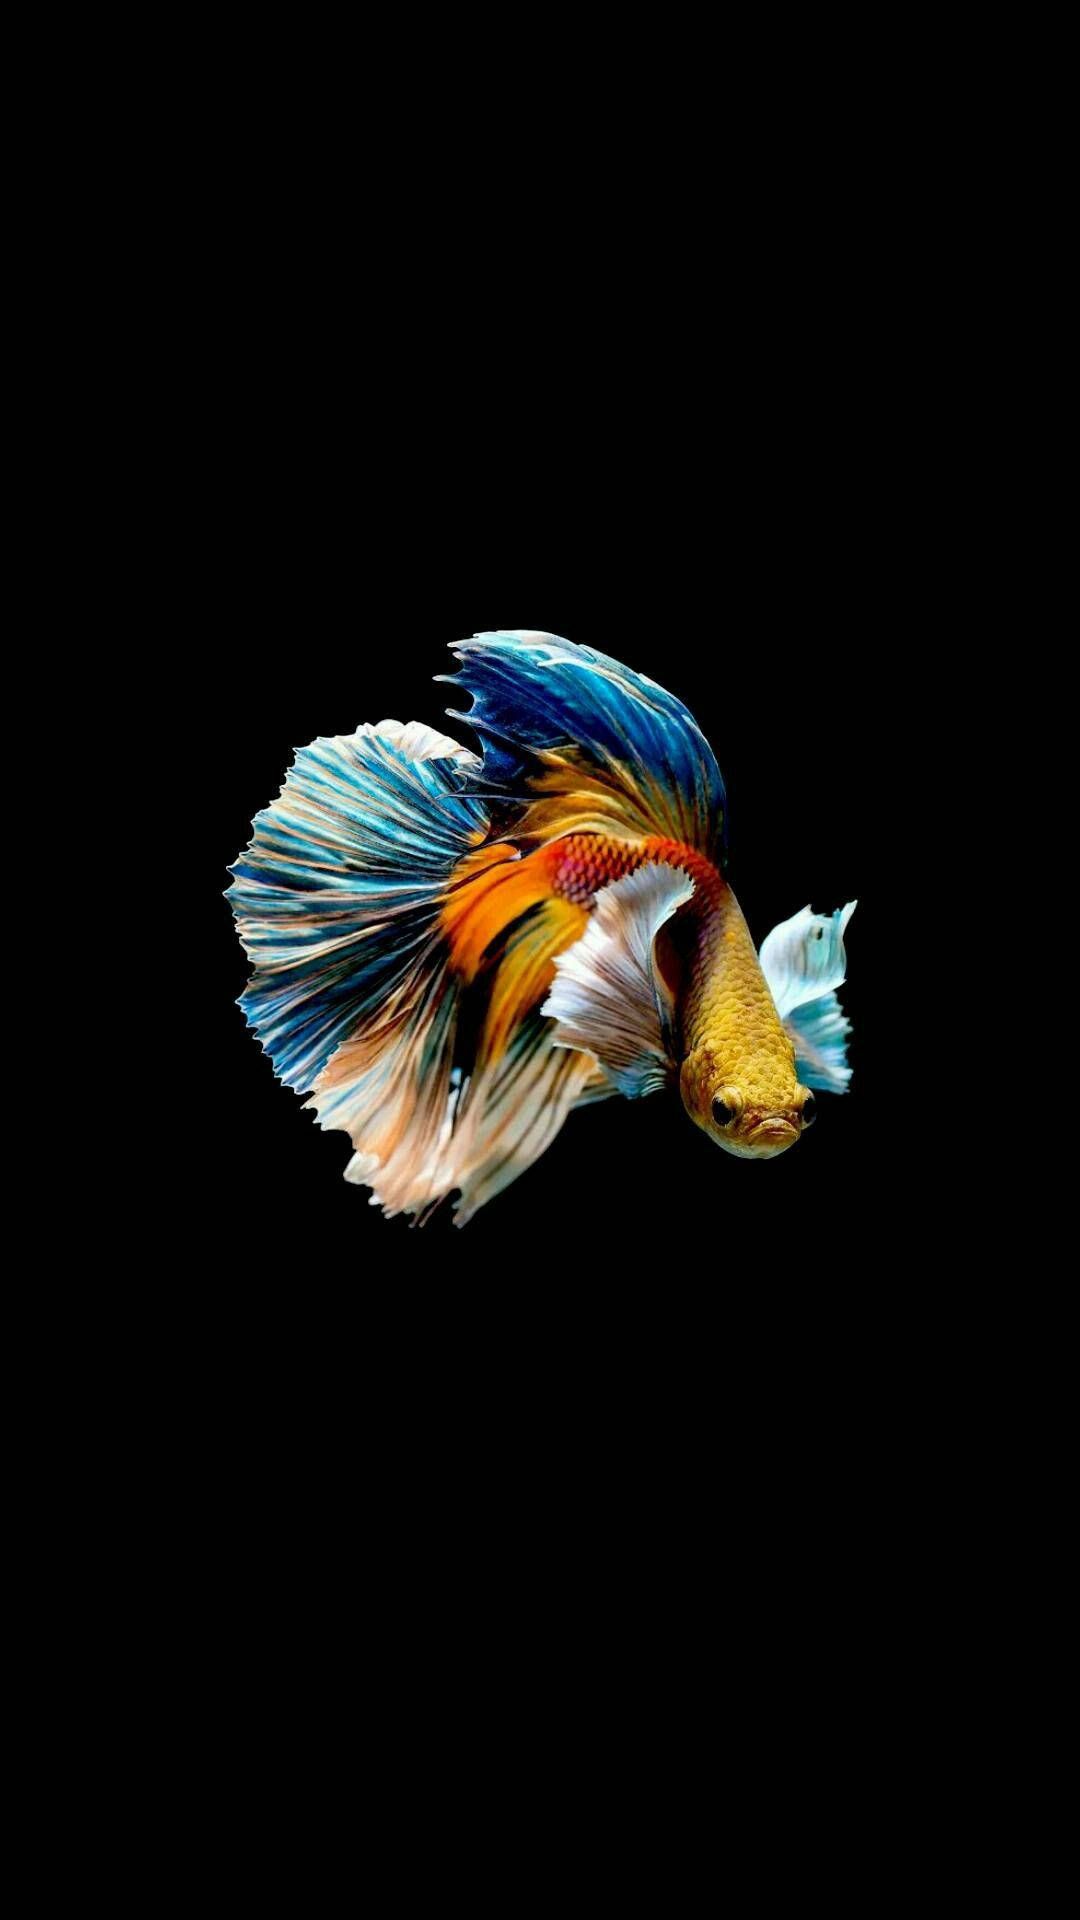 Free Fish iPhone Wallpaper Downloads, Fish iPhone Wallpaper for FREE